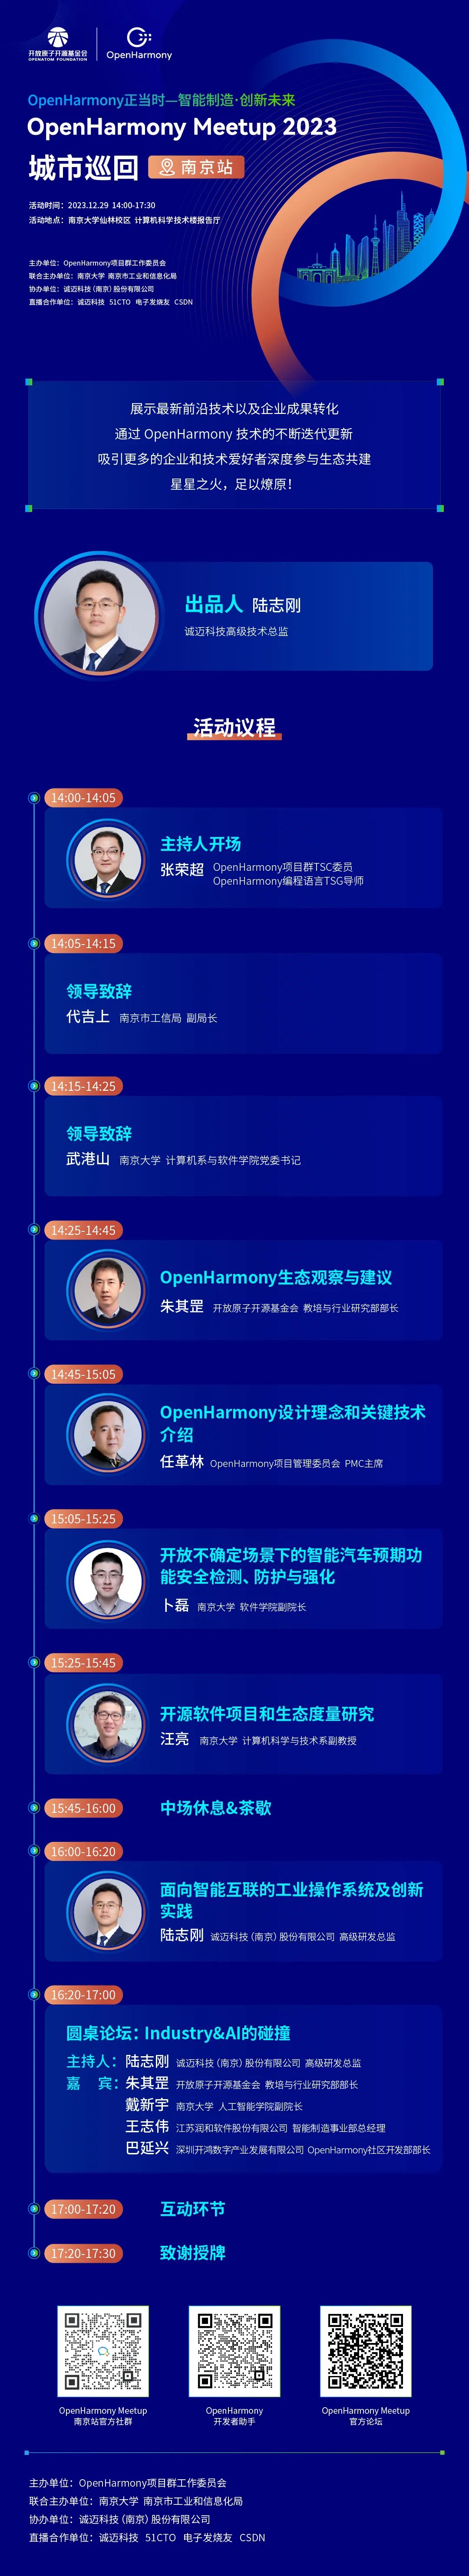 OpenHarmony Meetup 2023南京站亮点抢先看